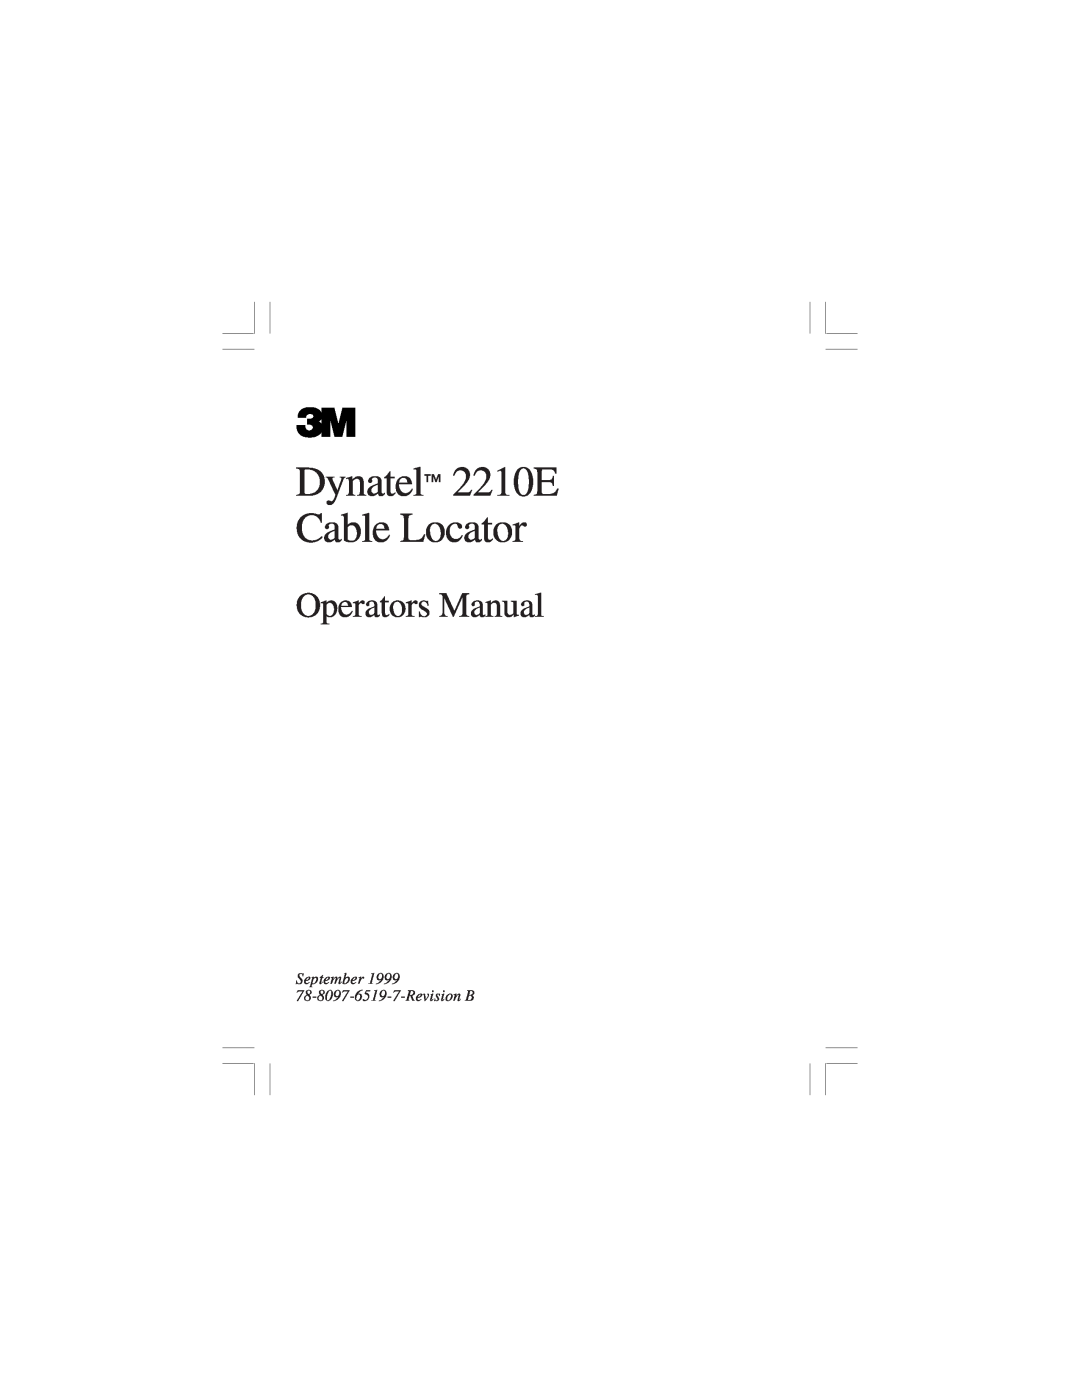 3M manual Dynatel 2210E Cable Locator, Operators Manual 